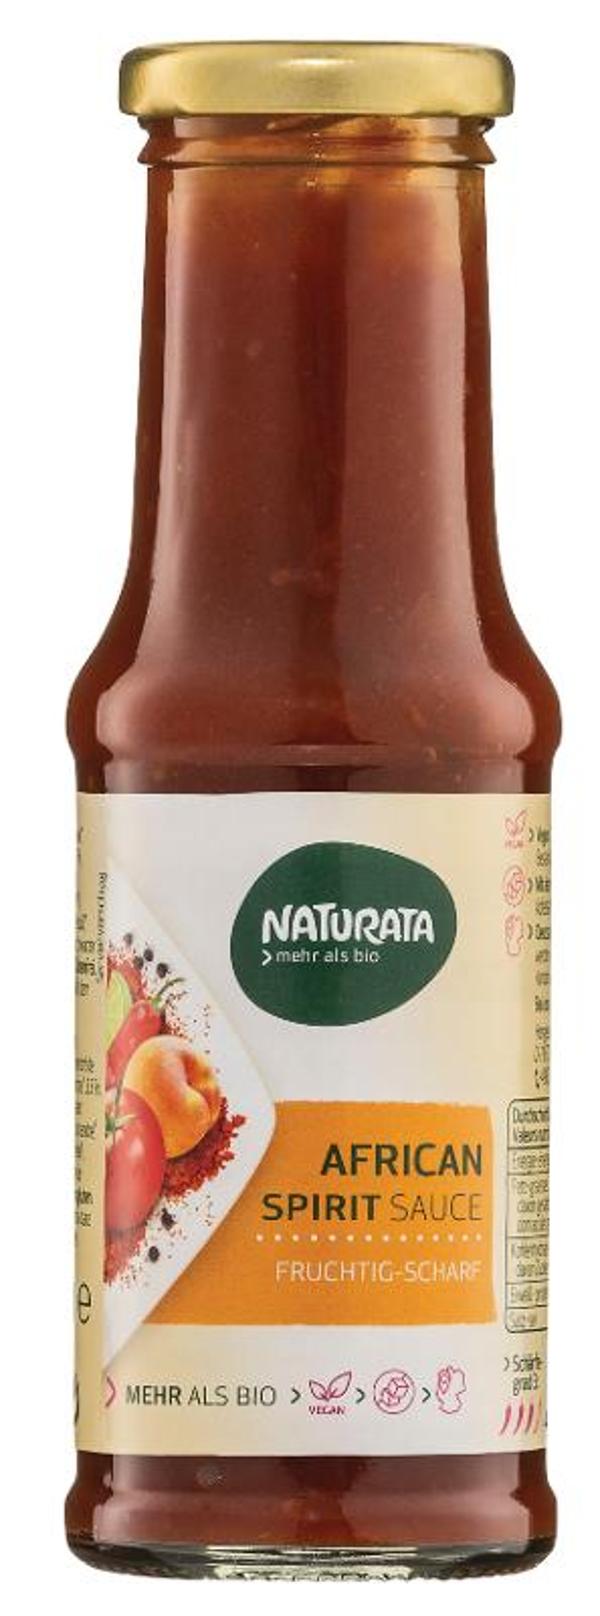 Produktfoto zu Naturata African Spirit Sauce - 210ml